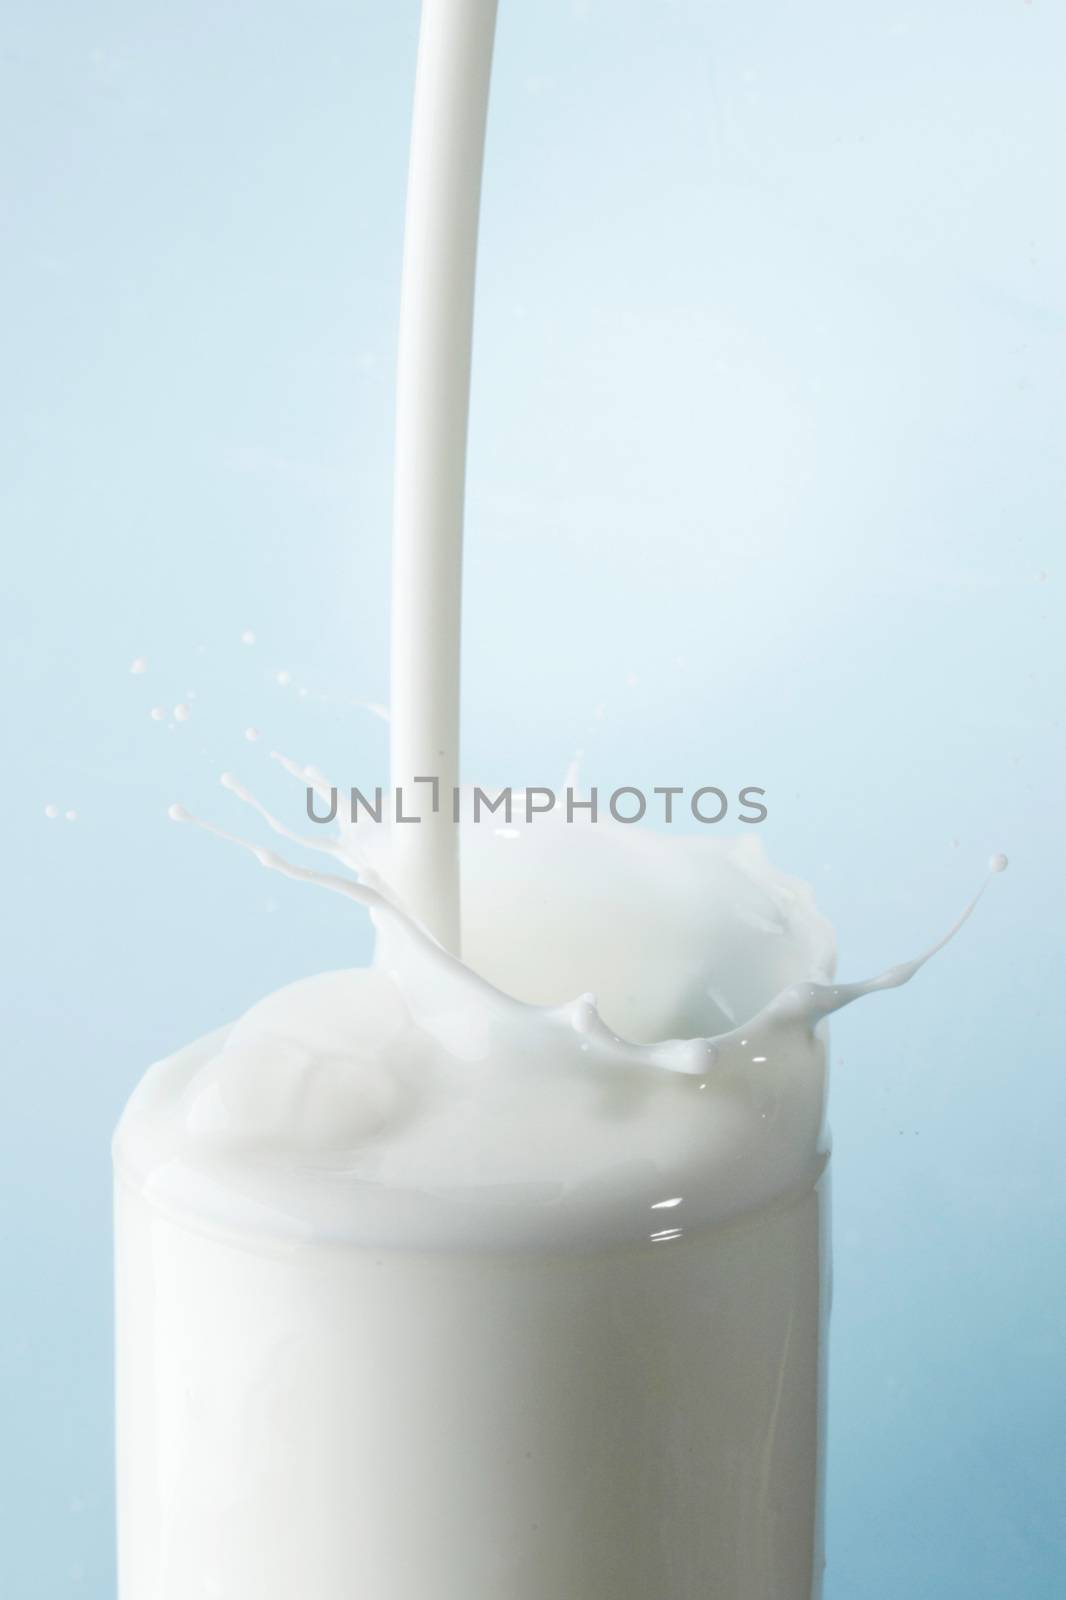 Splash of milk in glass on blue background